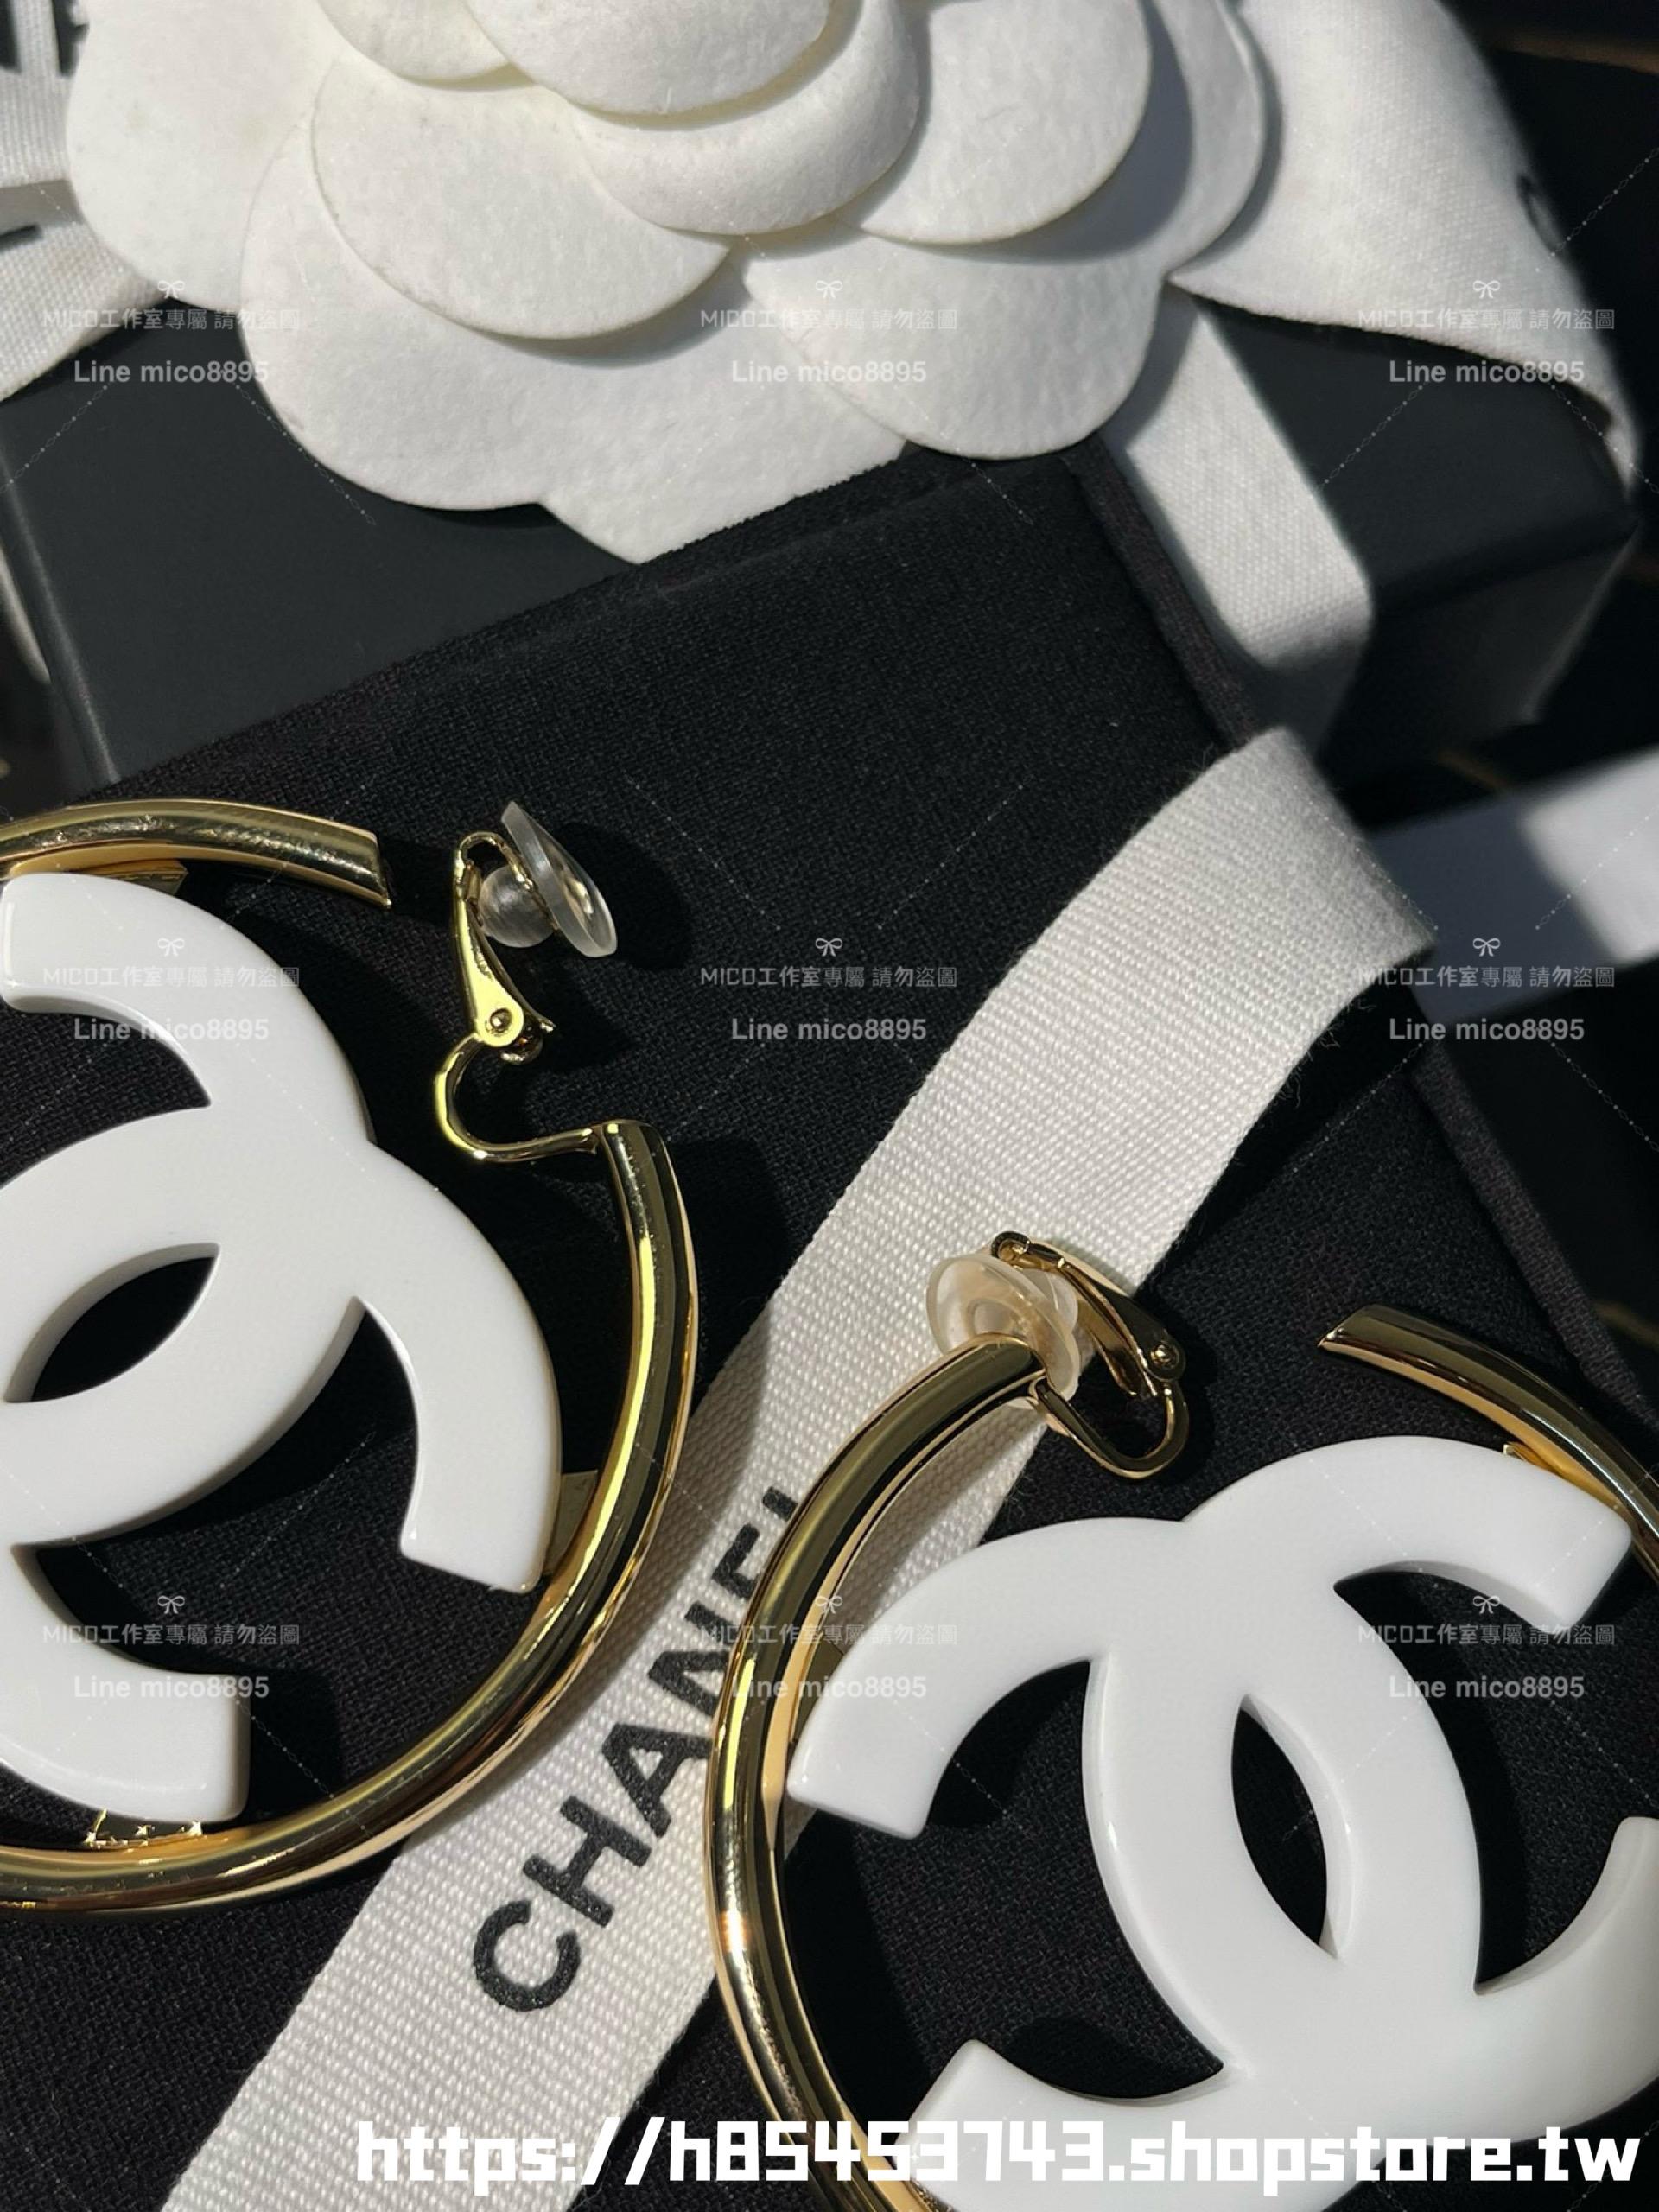 Chanel 小香 耳夾款 大圈壓克力白色鏤空金屬雙C耳夾耳環